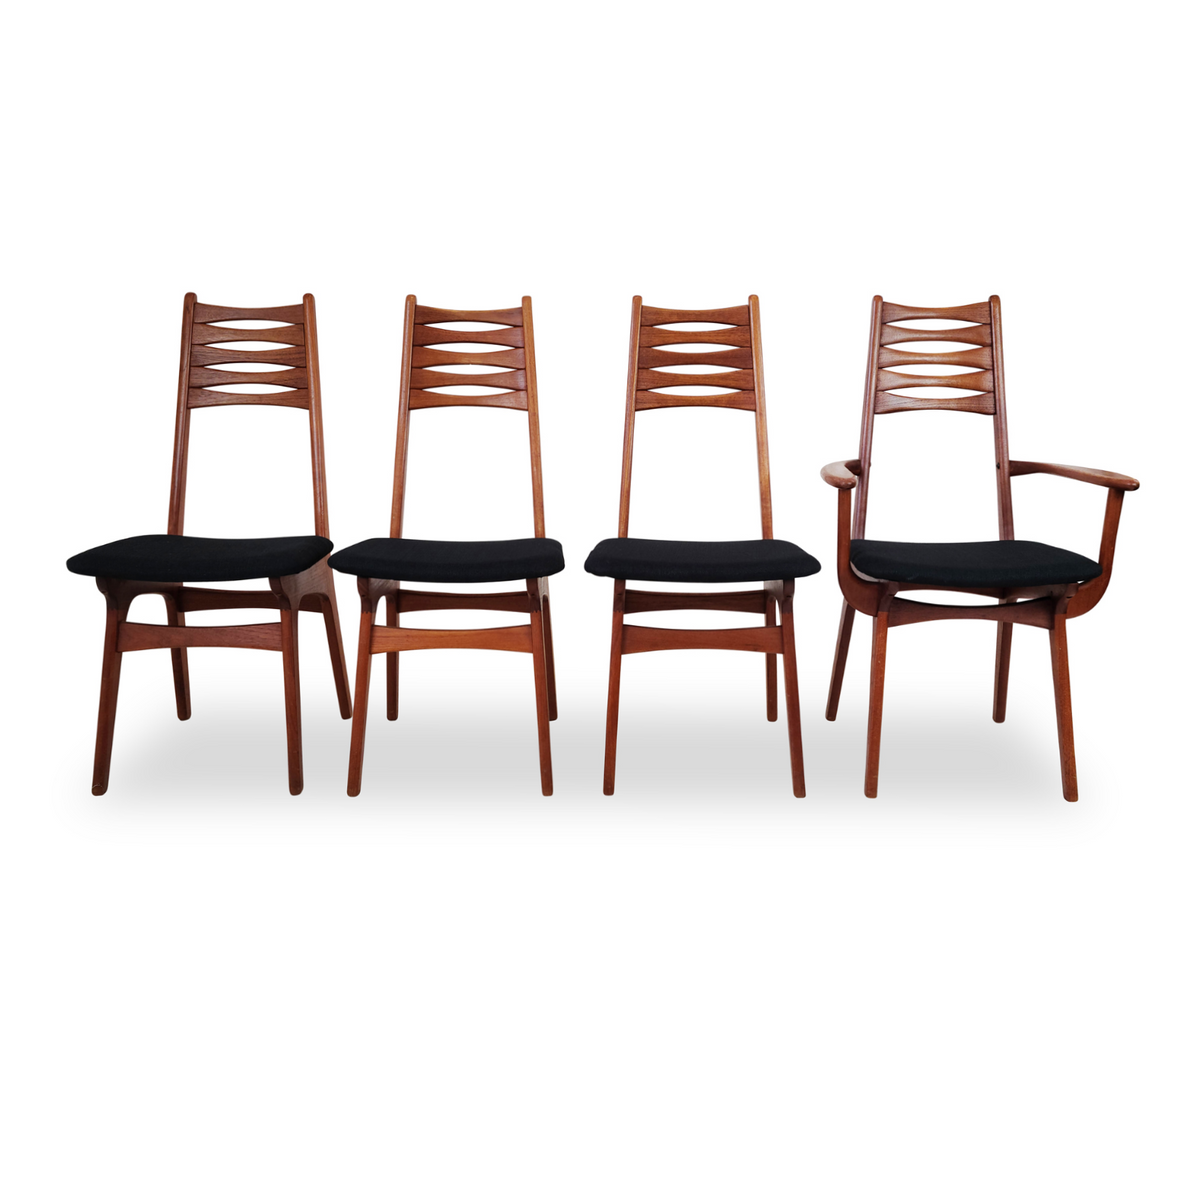 Teak Dining Chairs by Korup Stolefabrik